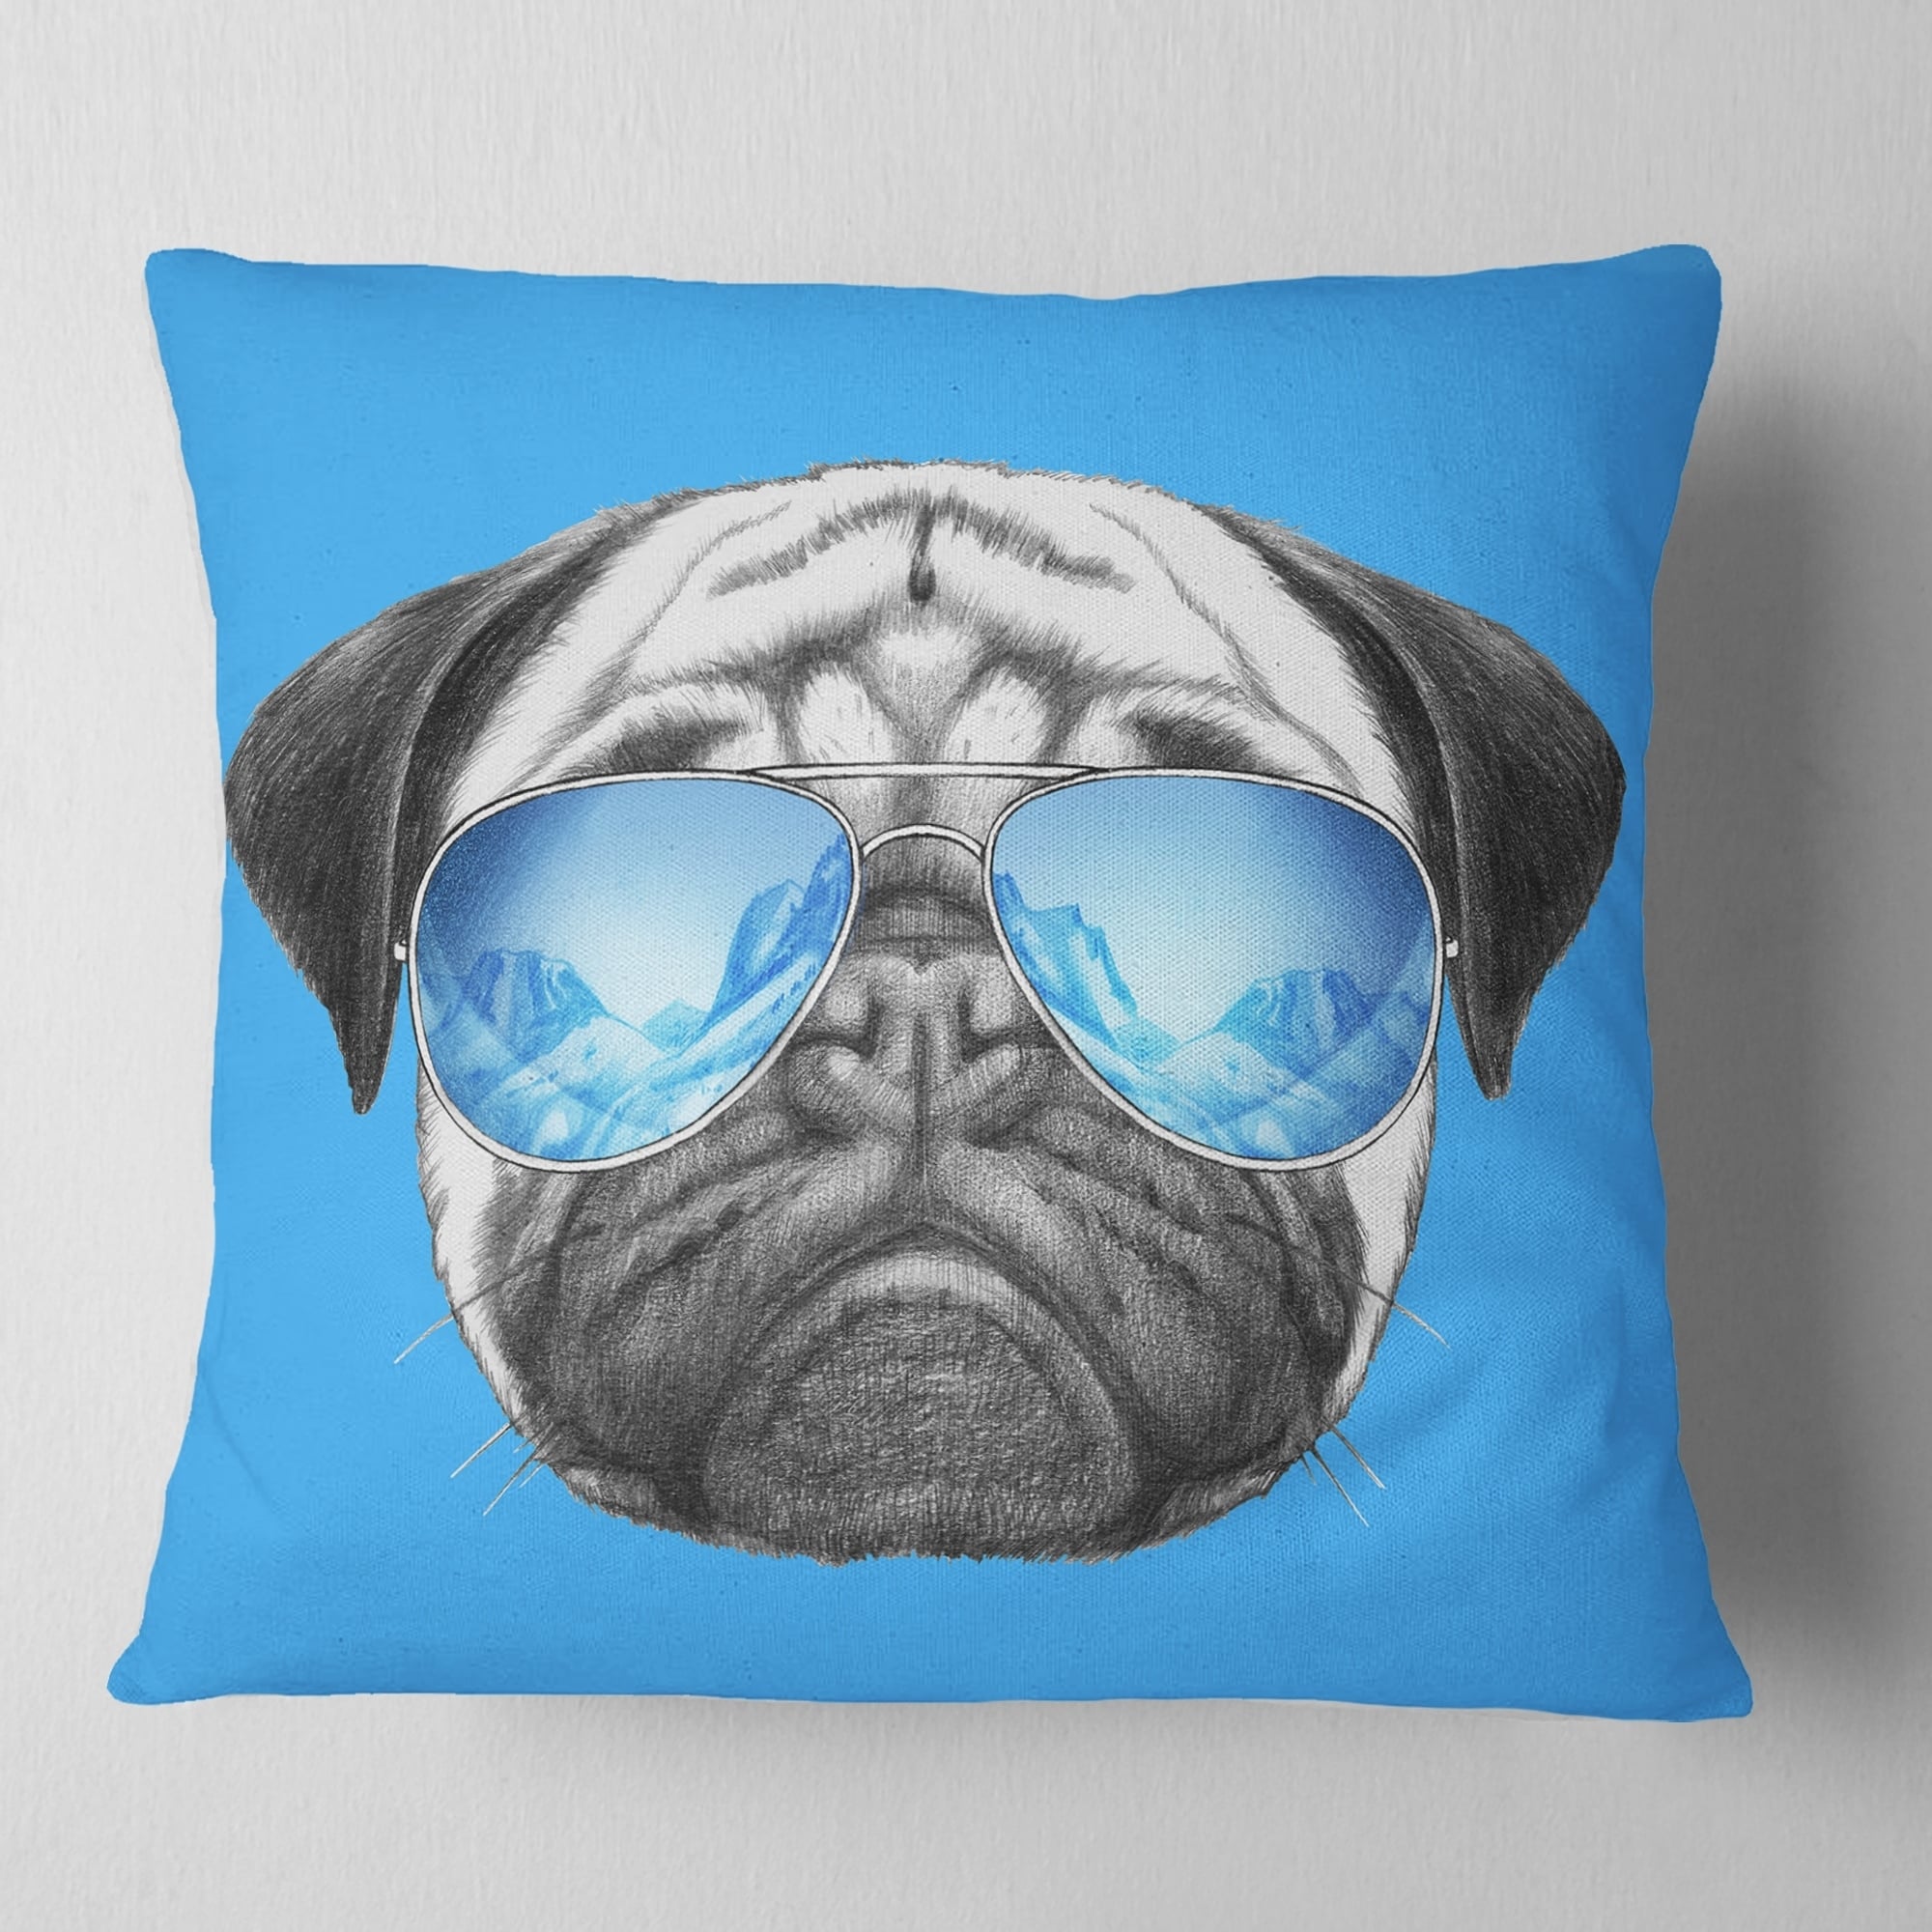 Designart CU13164-12-20 Pug Dog with Mirror Sunglasses Animal Lumbar Cushion Cover for Living Room Sofa Throw Pillow 12 x 20, 